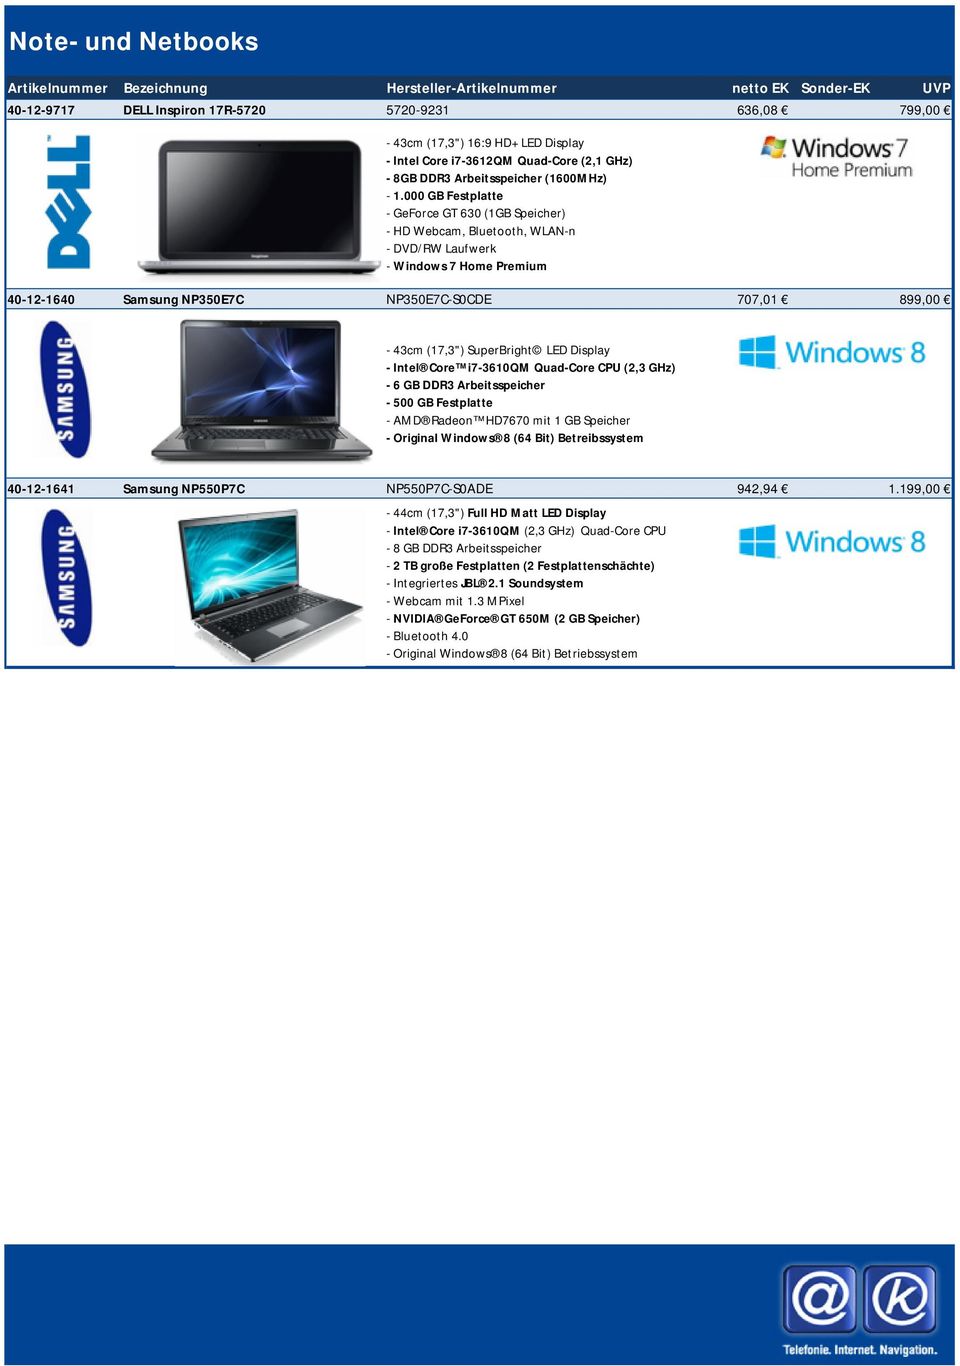 000 GB Festplatte - GeForce GT 630 (1GB Speicher) - HD Webcam, Bluetooth, WLAN-n - DVD/RW Laufwerk - Windows 7 Home Premium 40-12-1640 Samsung NP350E7C NP350E7C-S0CDE 707,01 899,00-43cm (17,3")